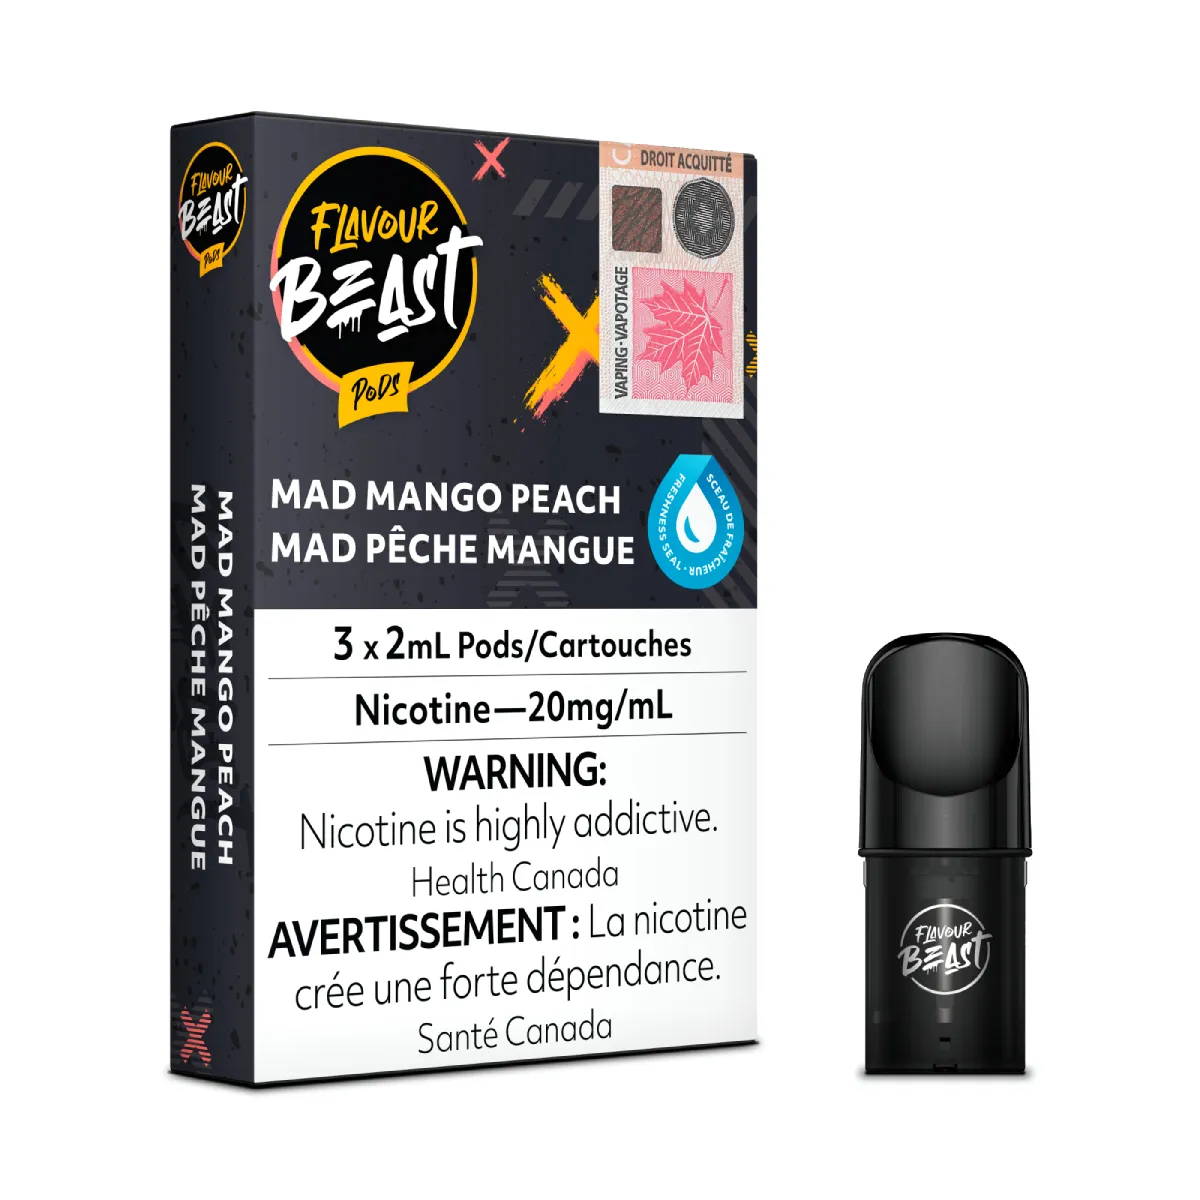 Flavour Beast Pods - Mad Mango Peach (3x2mL) (6757136236599)